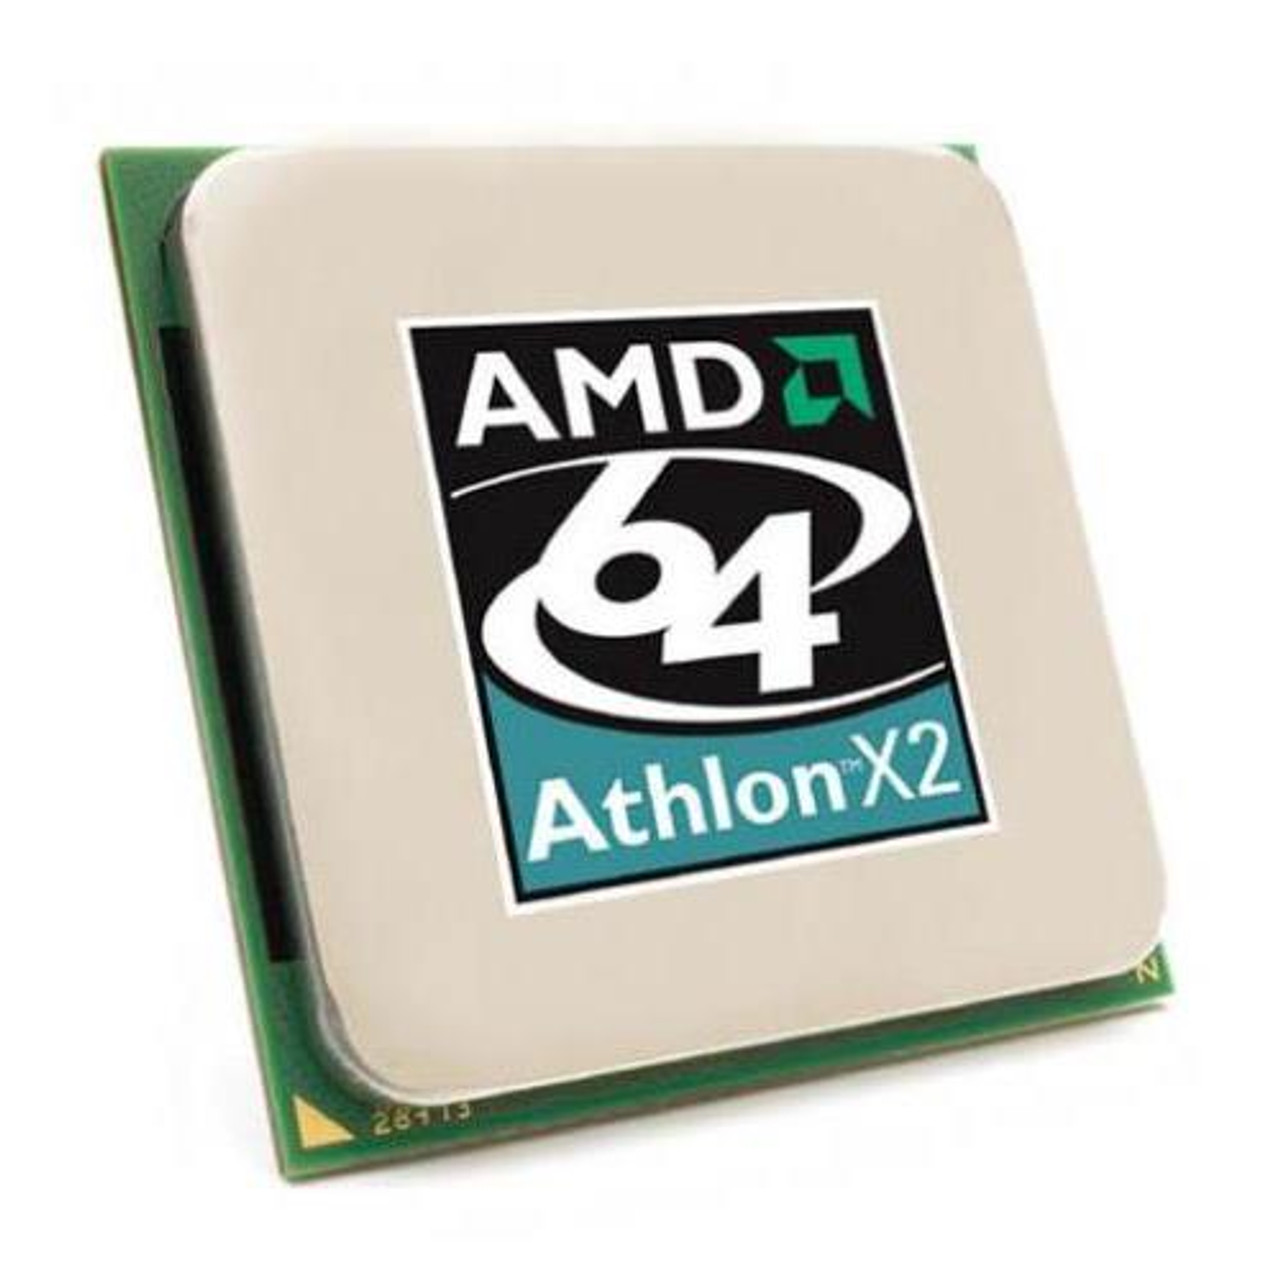 Adx6000iaa6cz Amd Athlon 64 X2 6000 Dual Core 3 00ghz 2mb L2 Cache Socket Am2